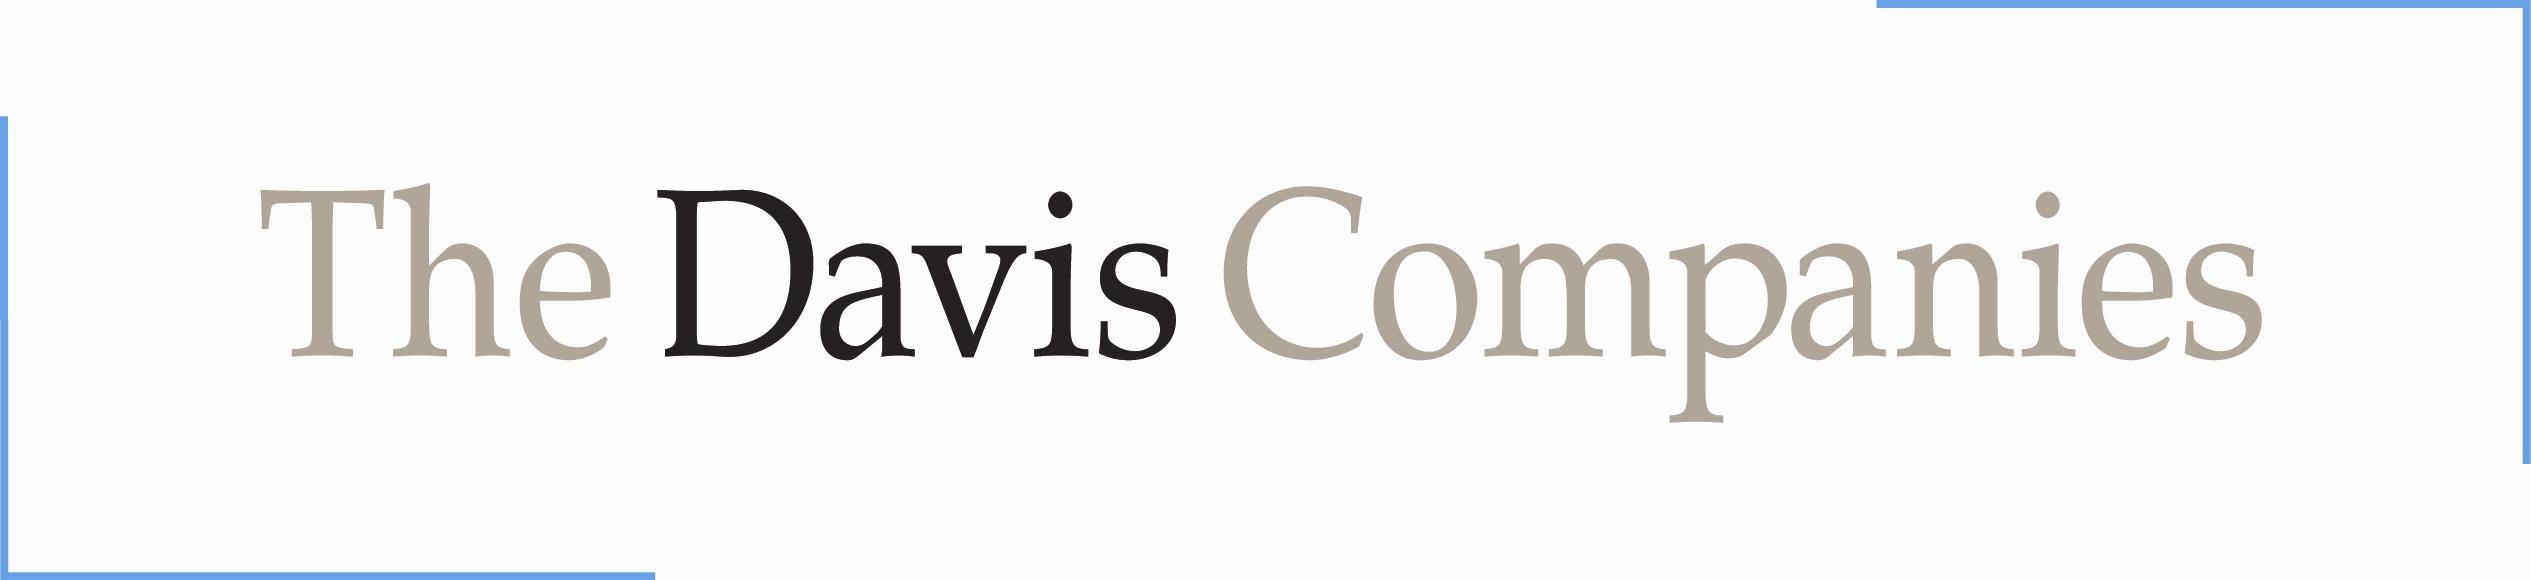 The Davis Companies logo